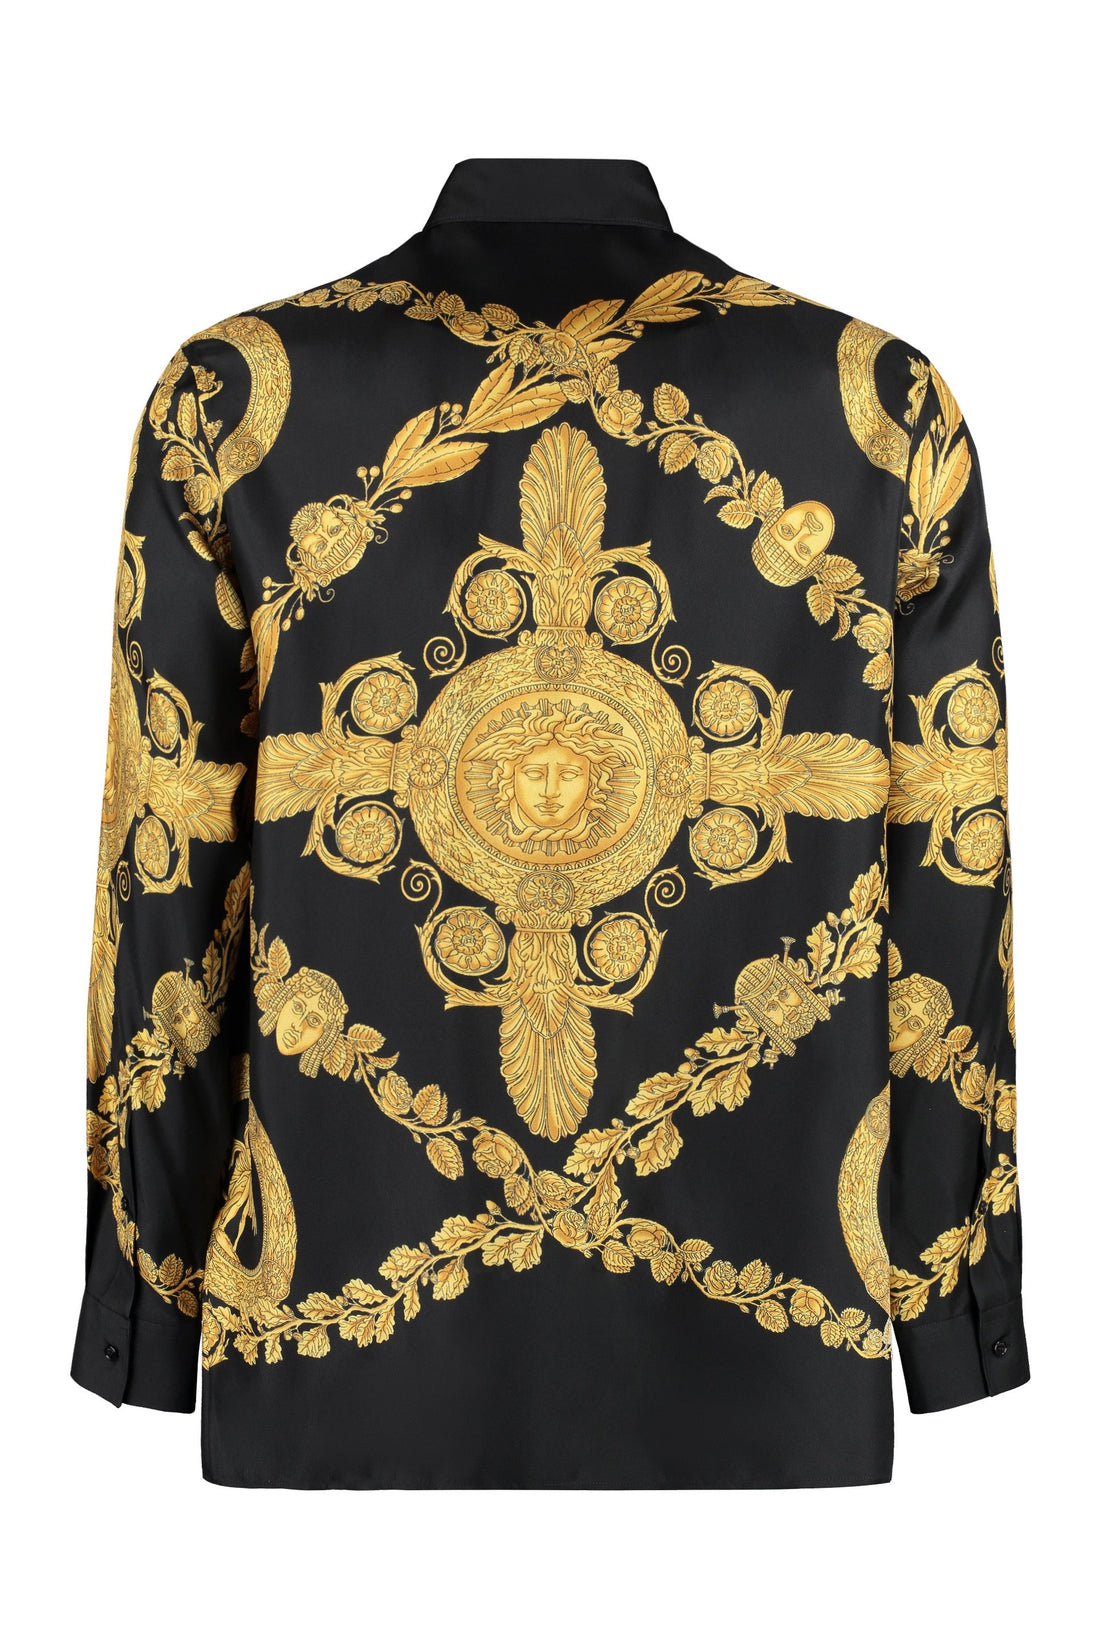 Versace-OUTLET-SALE-Printed silk shirt-ARCHIVIST